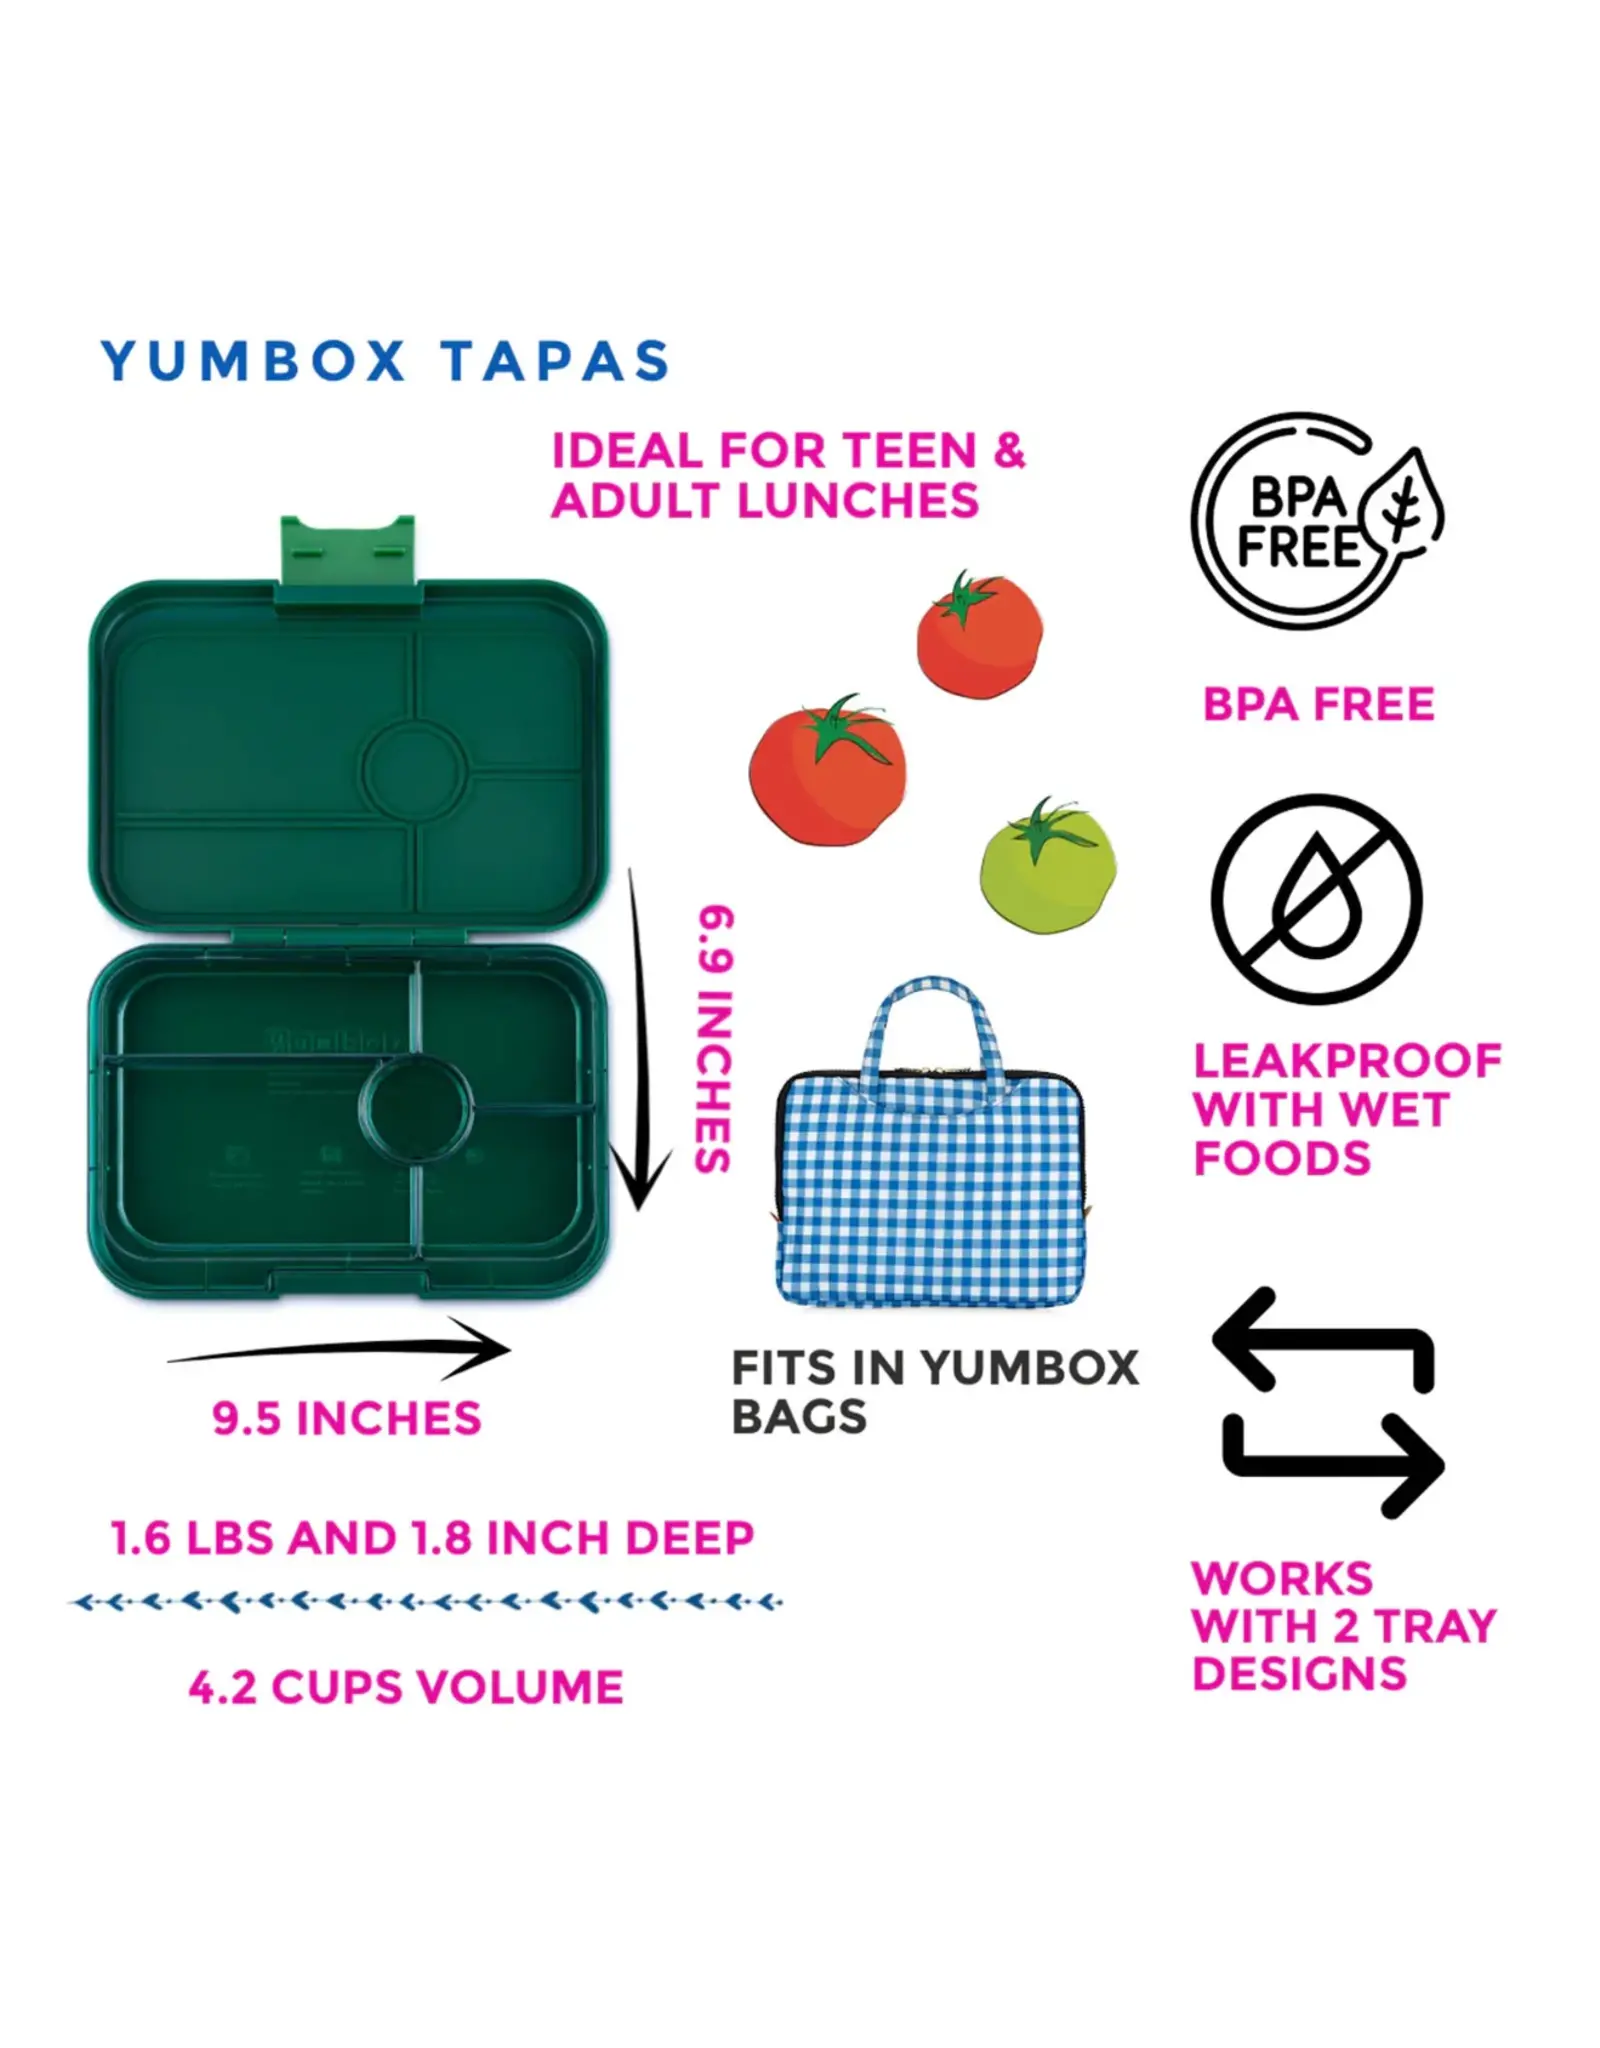 Yumbox Yumbox Tapas XL 5-vakken - Greenwich Green (Green Clear)